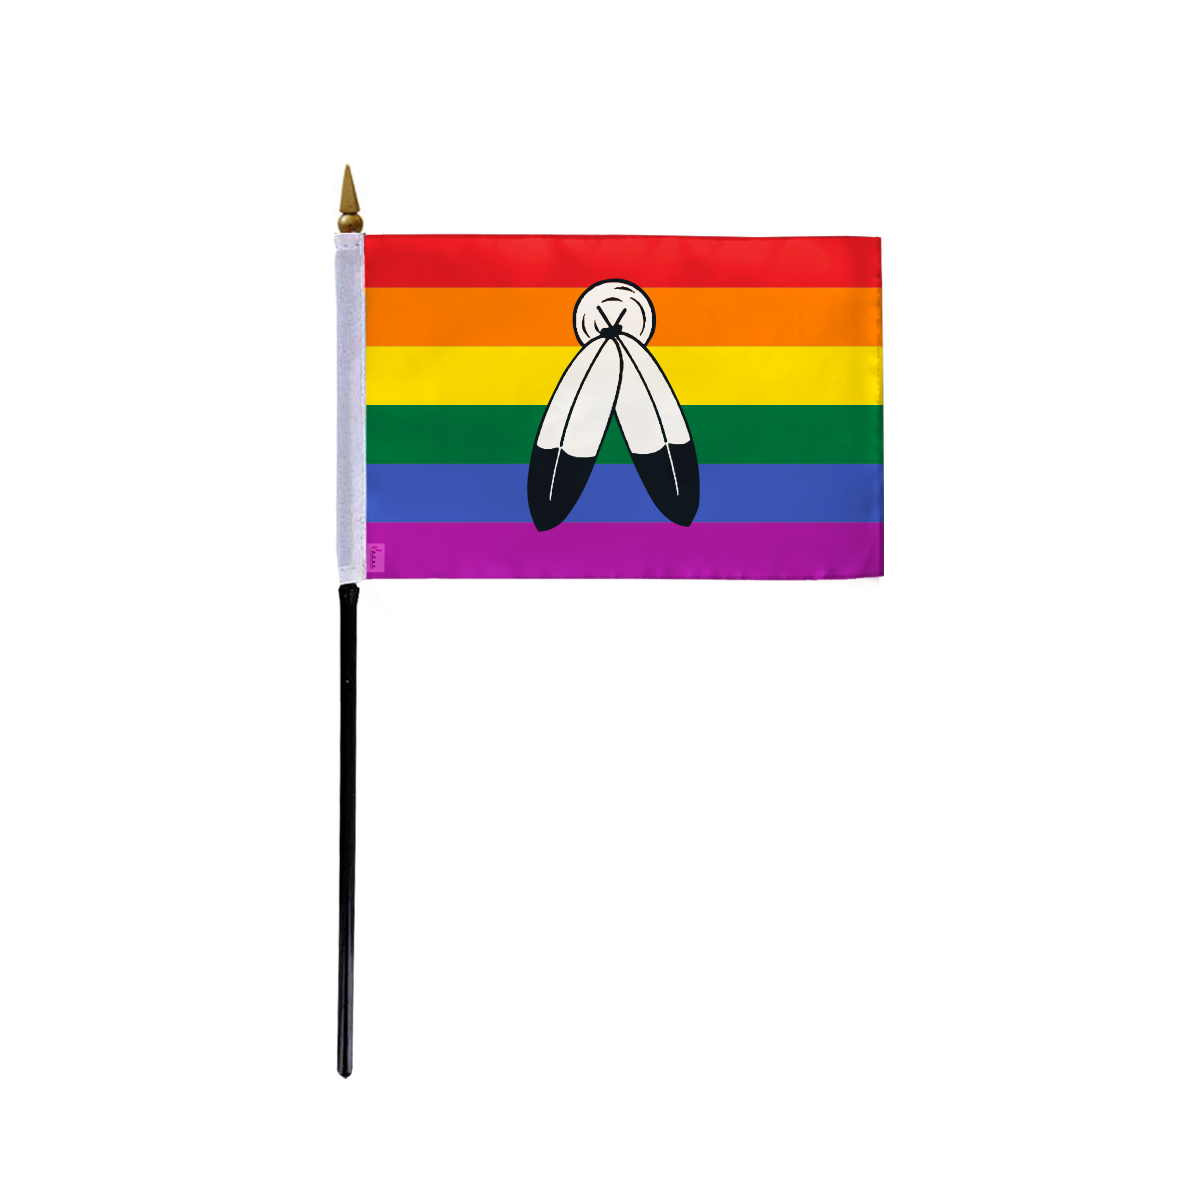 AGAS Small Two-Spirit Rainbow Flag 4x6 inch Flag on a 11 inch Plastic Stick